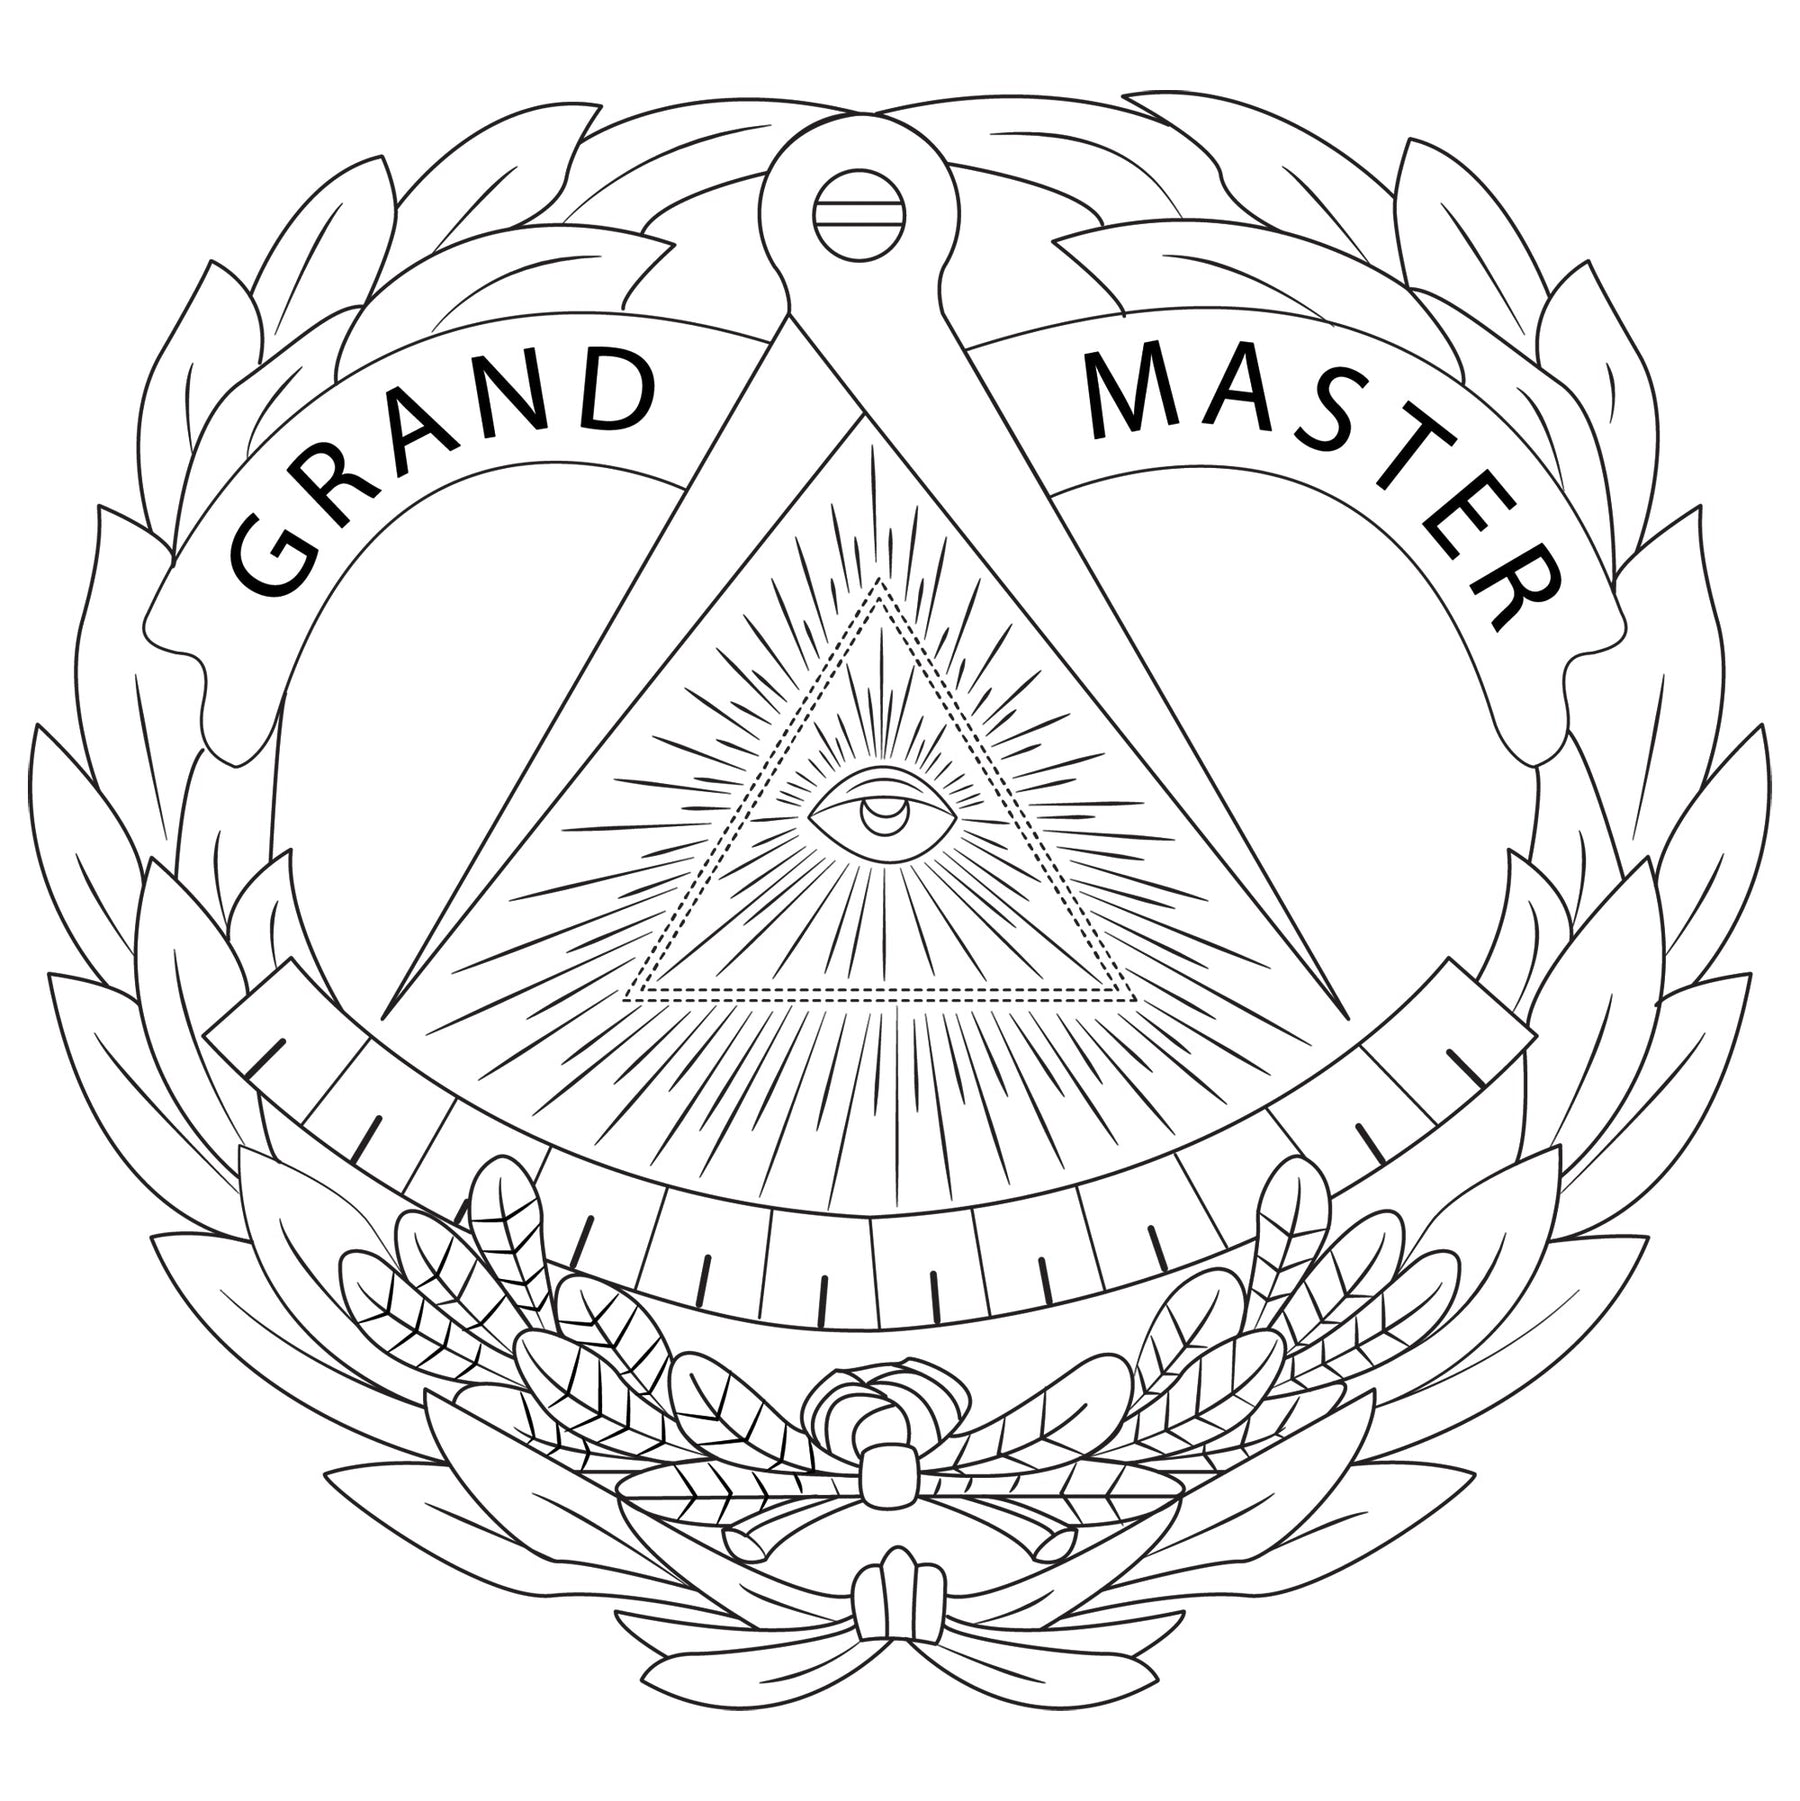 Grand Master Blue Lodge Clothing Accessories Set - Various Colors - Bricks Masons